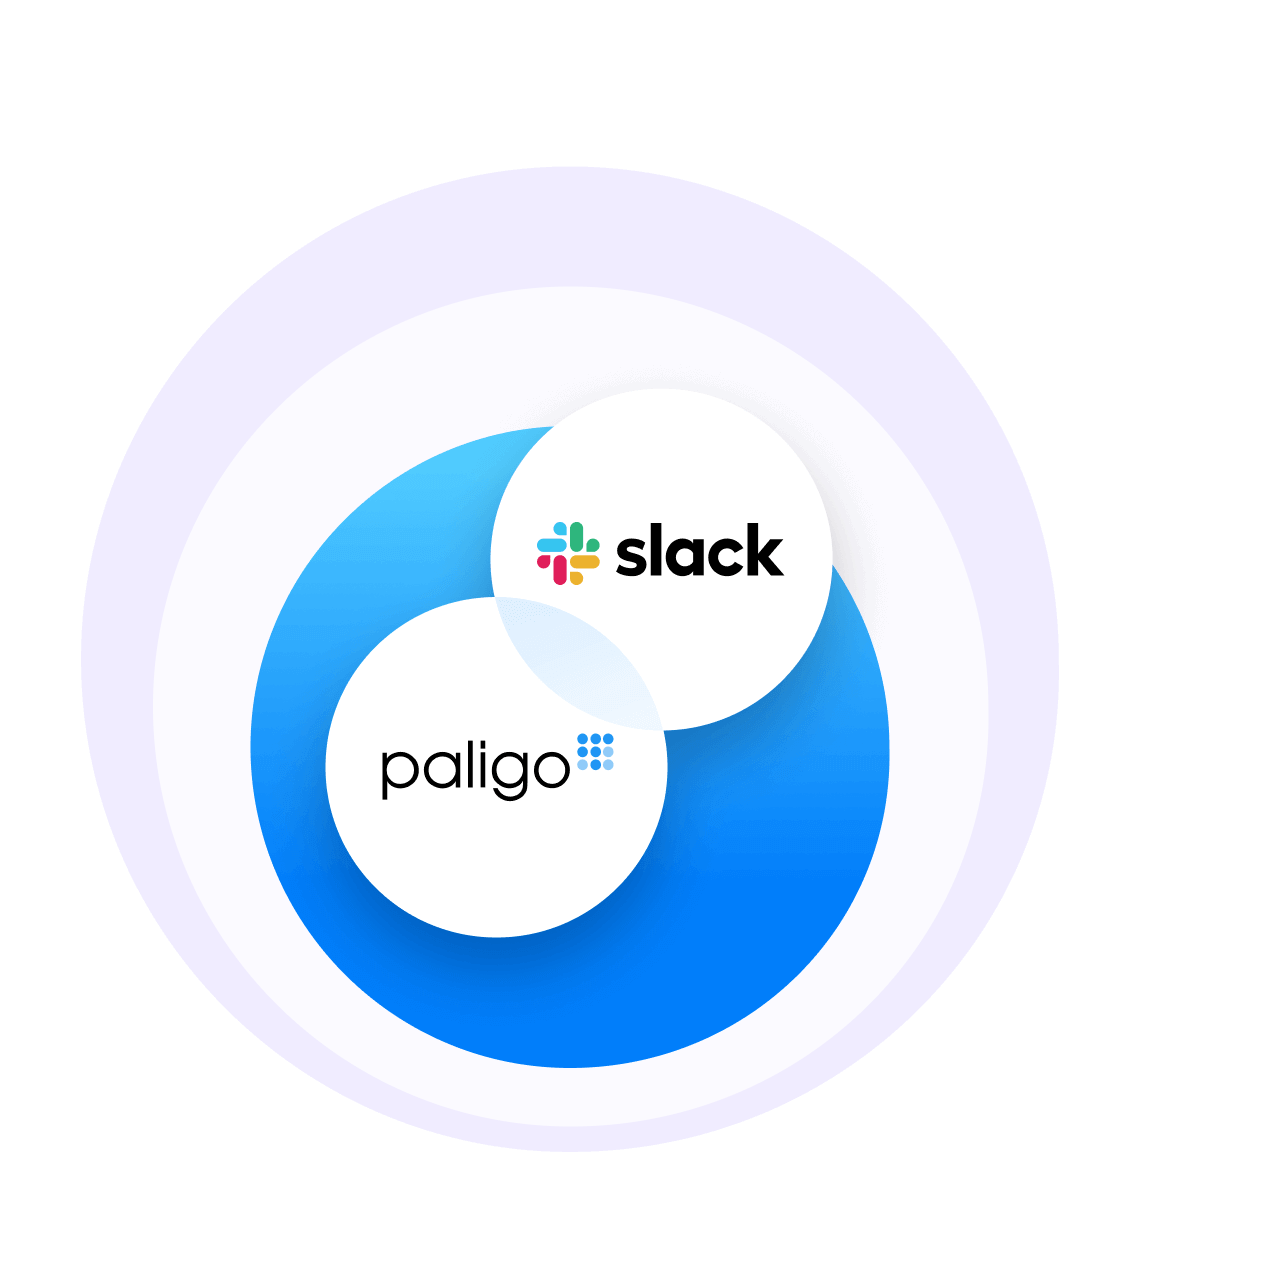 paligo-plus-slack.png